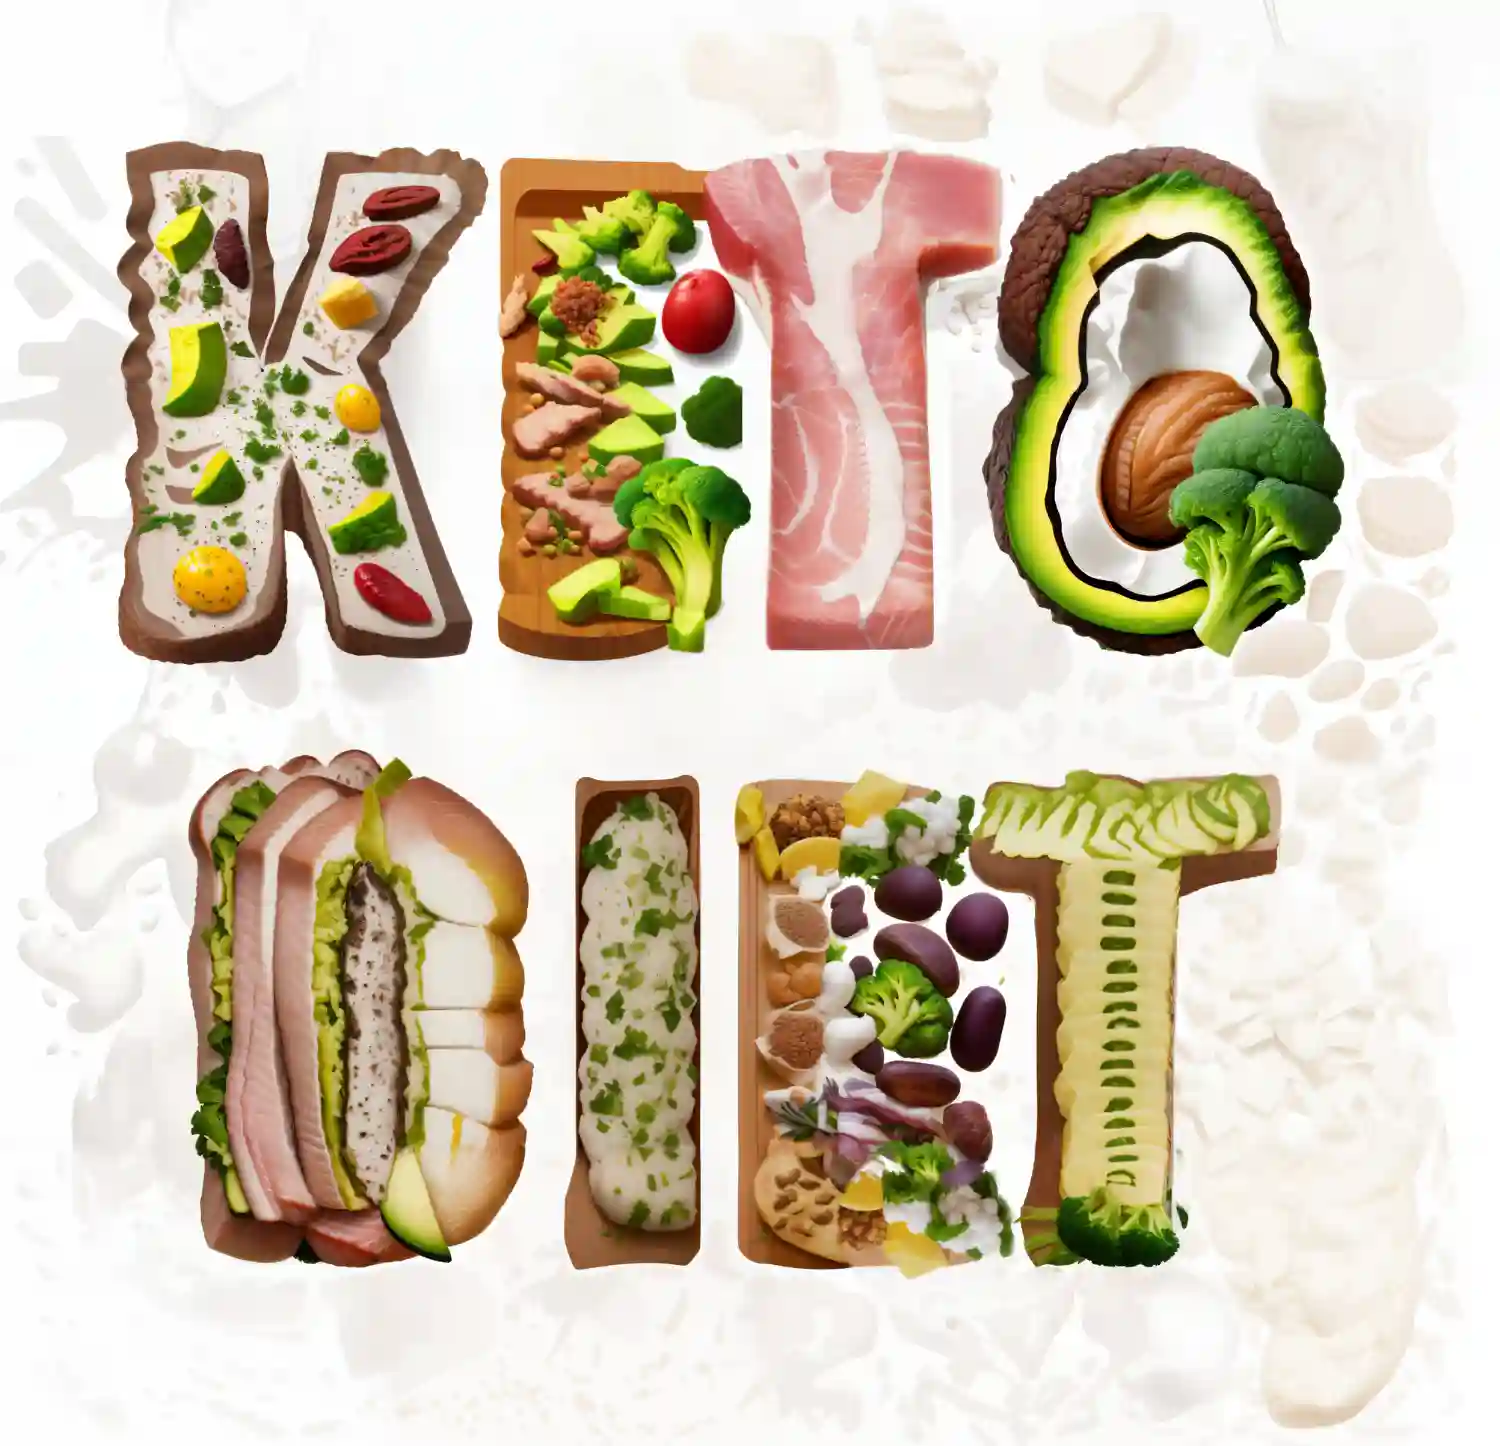 Keto diet featured image